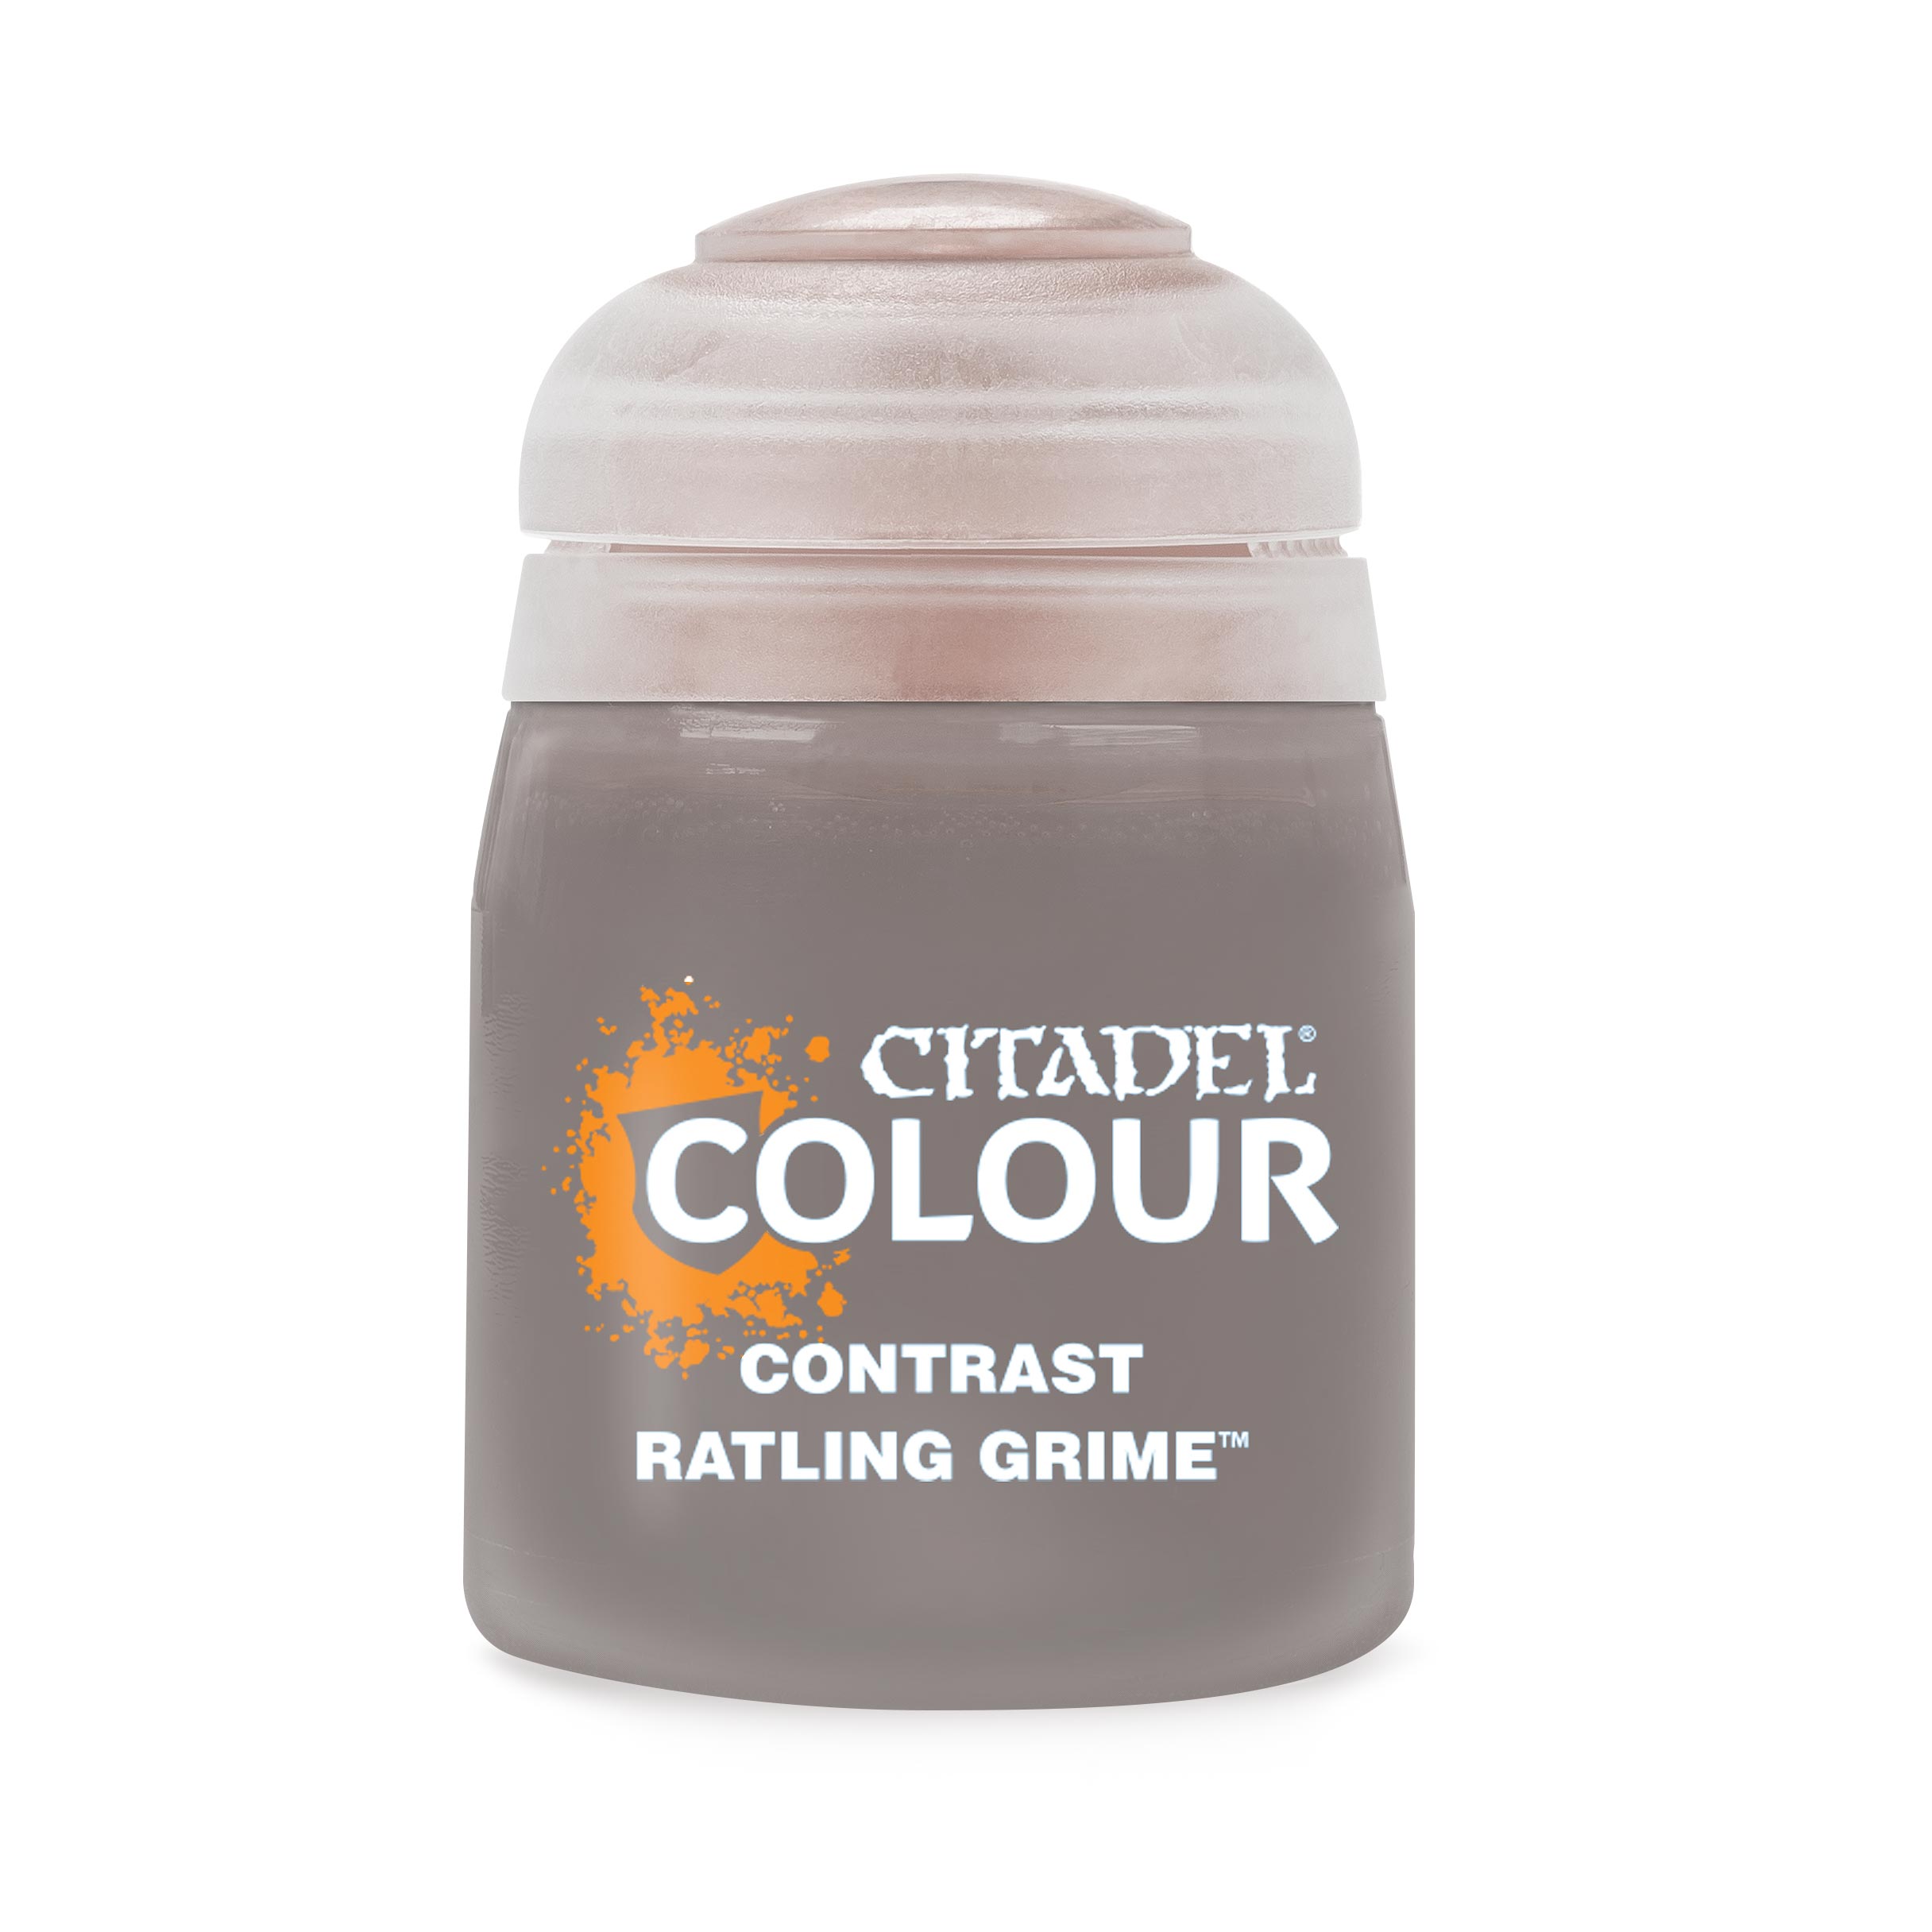 Contrast Ratling Grime - Citadel Colour